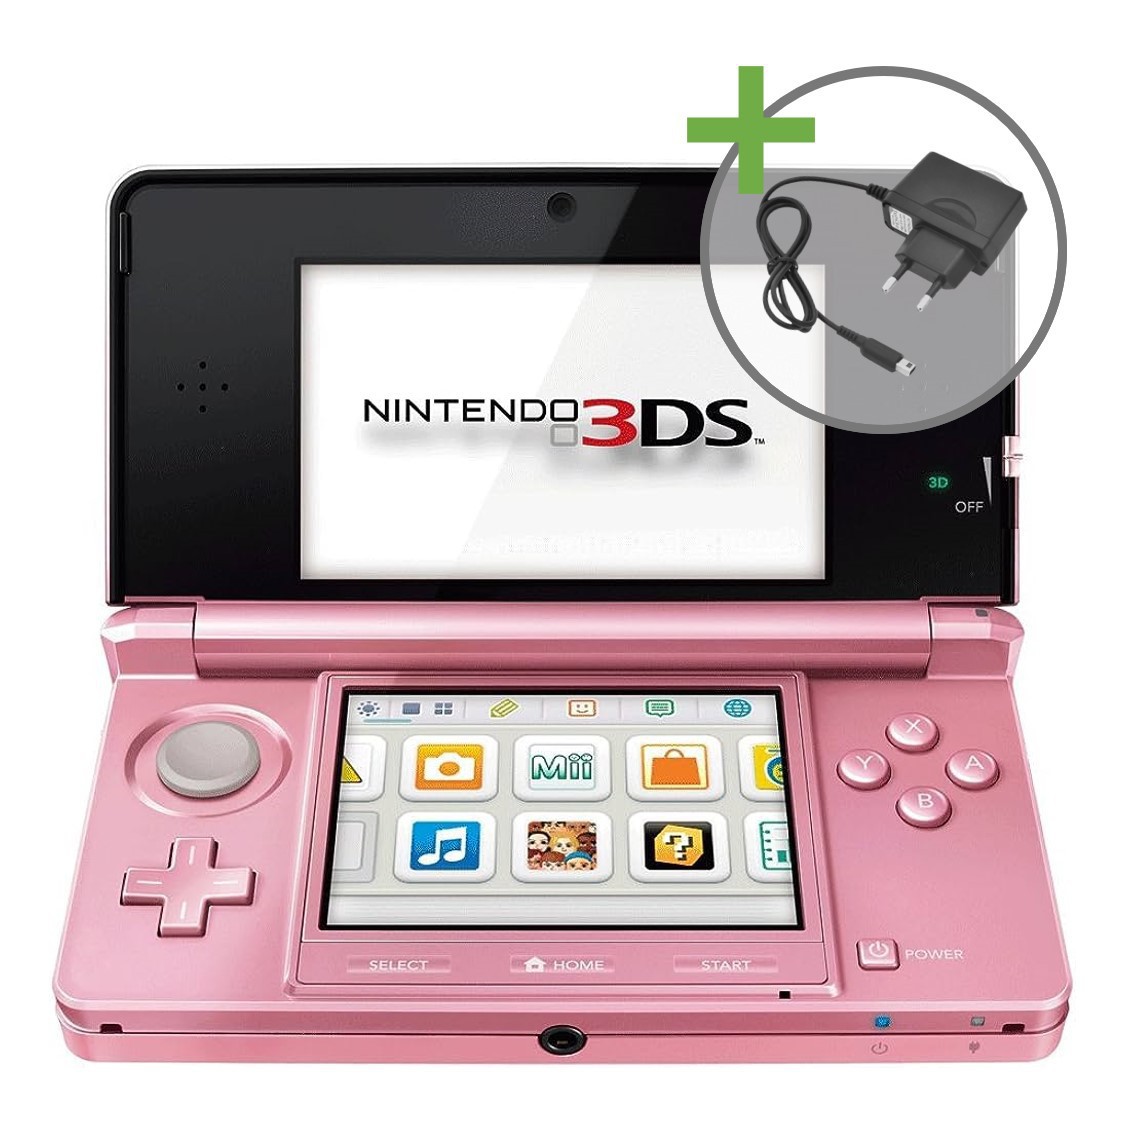 Nintendo 3DS - Coral Pink - Nintendögs + Cats Edition [Complete] - Nintendo 3DS Hardware - 2